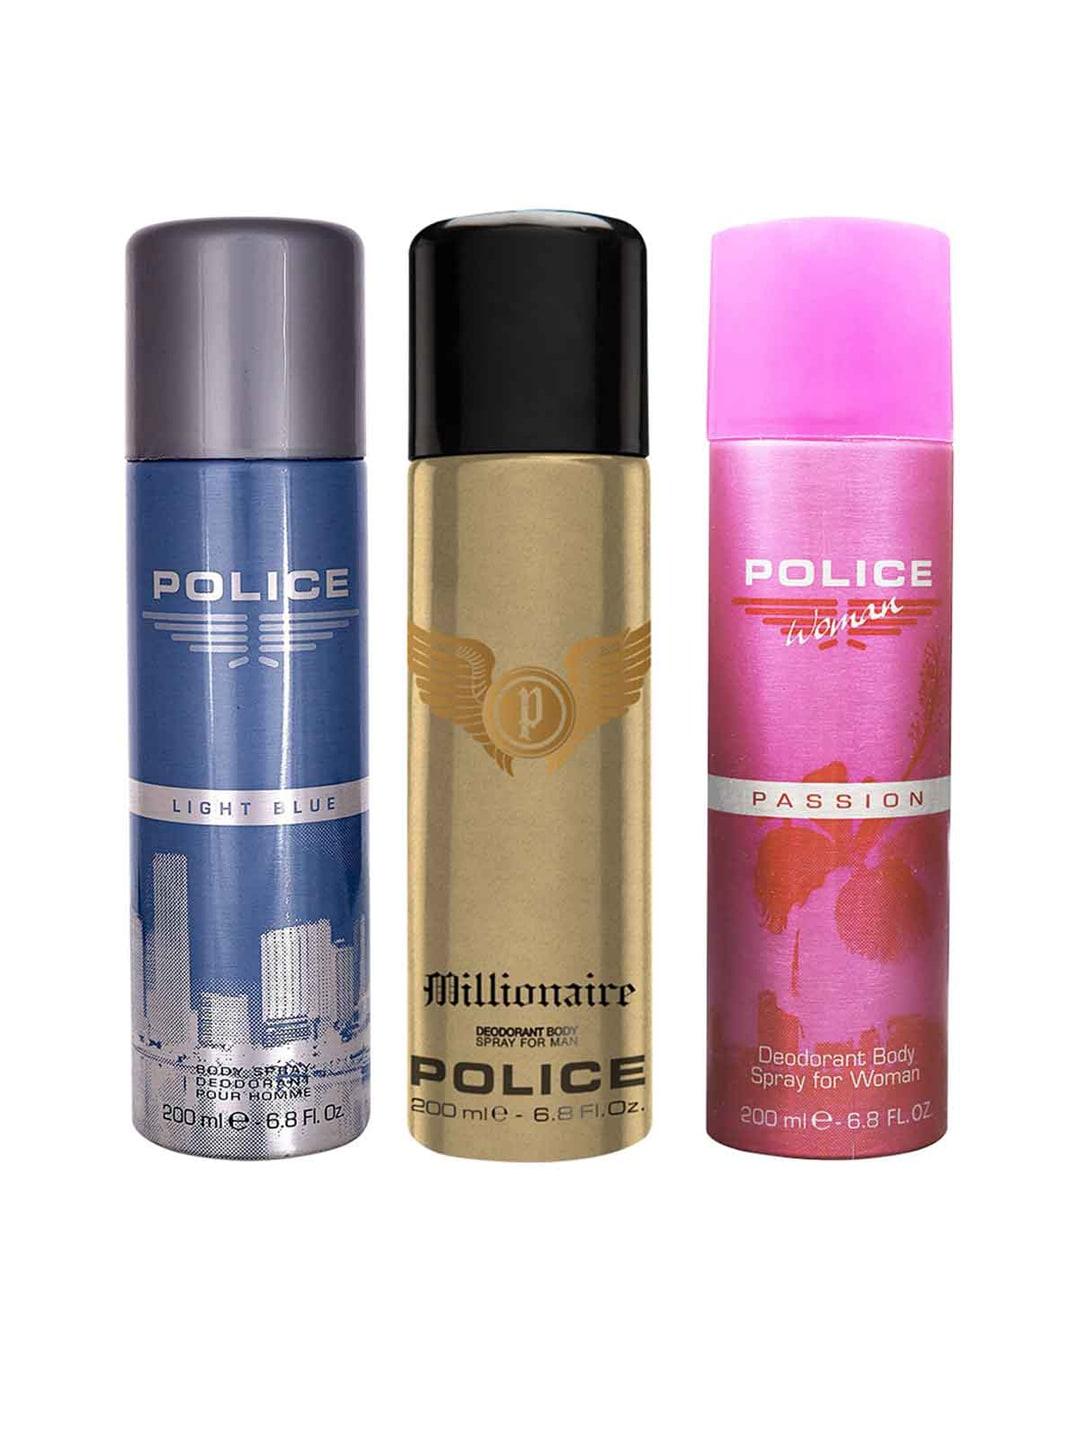 Police Men & Women Set of 3 Deodorants Light Blue Millionaire Passion 200ml each